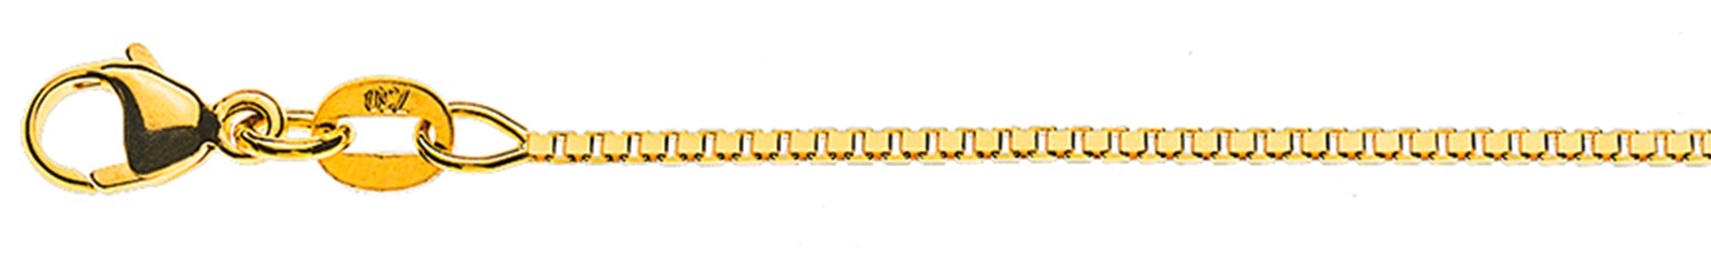 AURONOS Style Necklace yellow gold 9K Venetian chain diamond cut 40cm 1.1mm